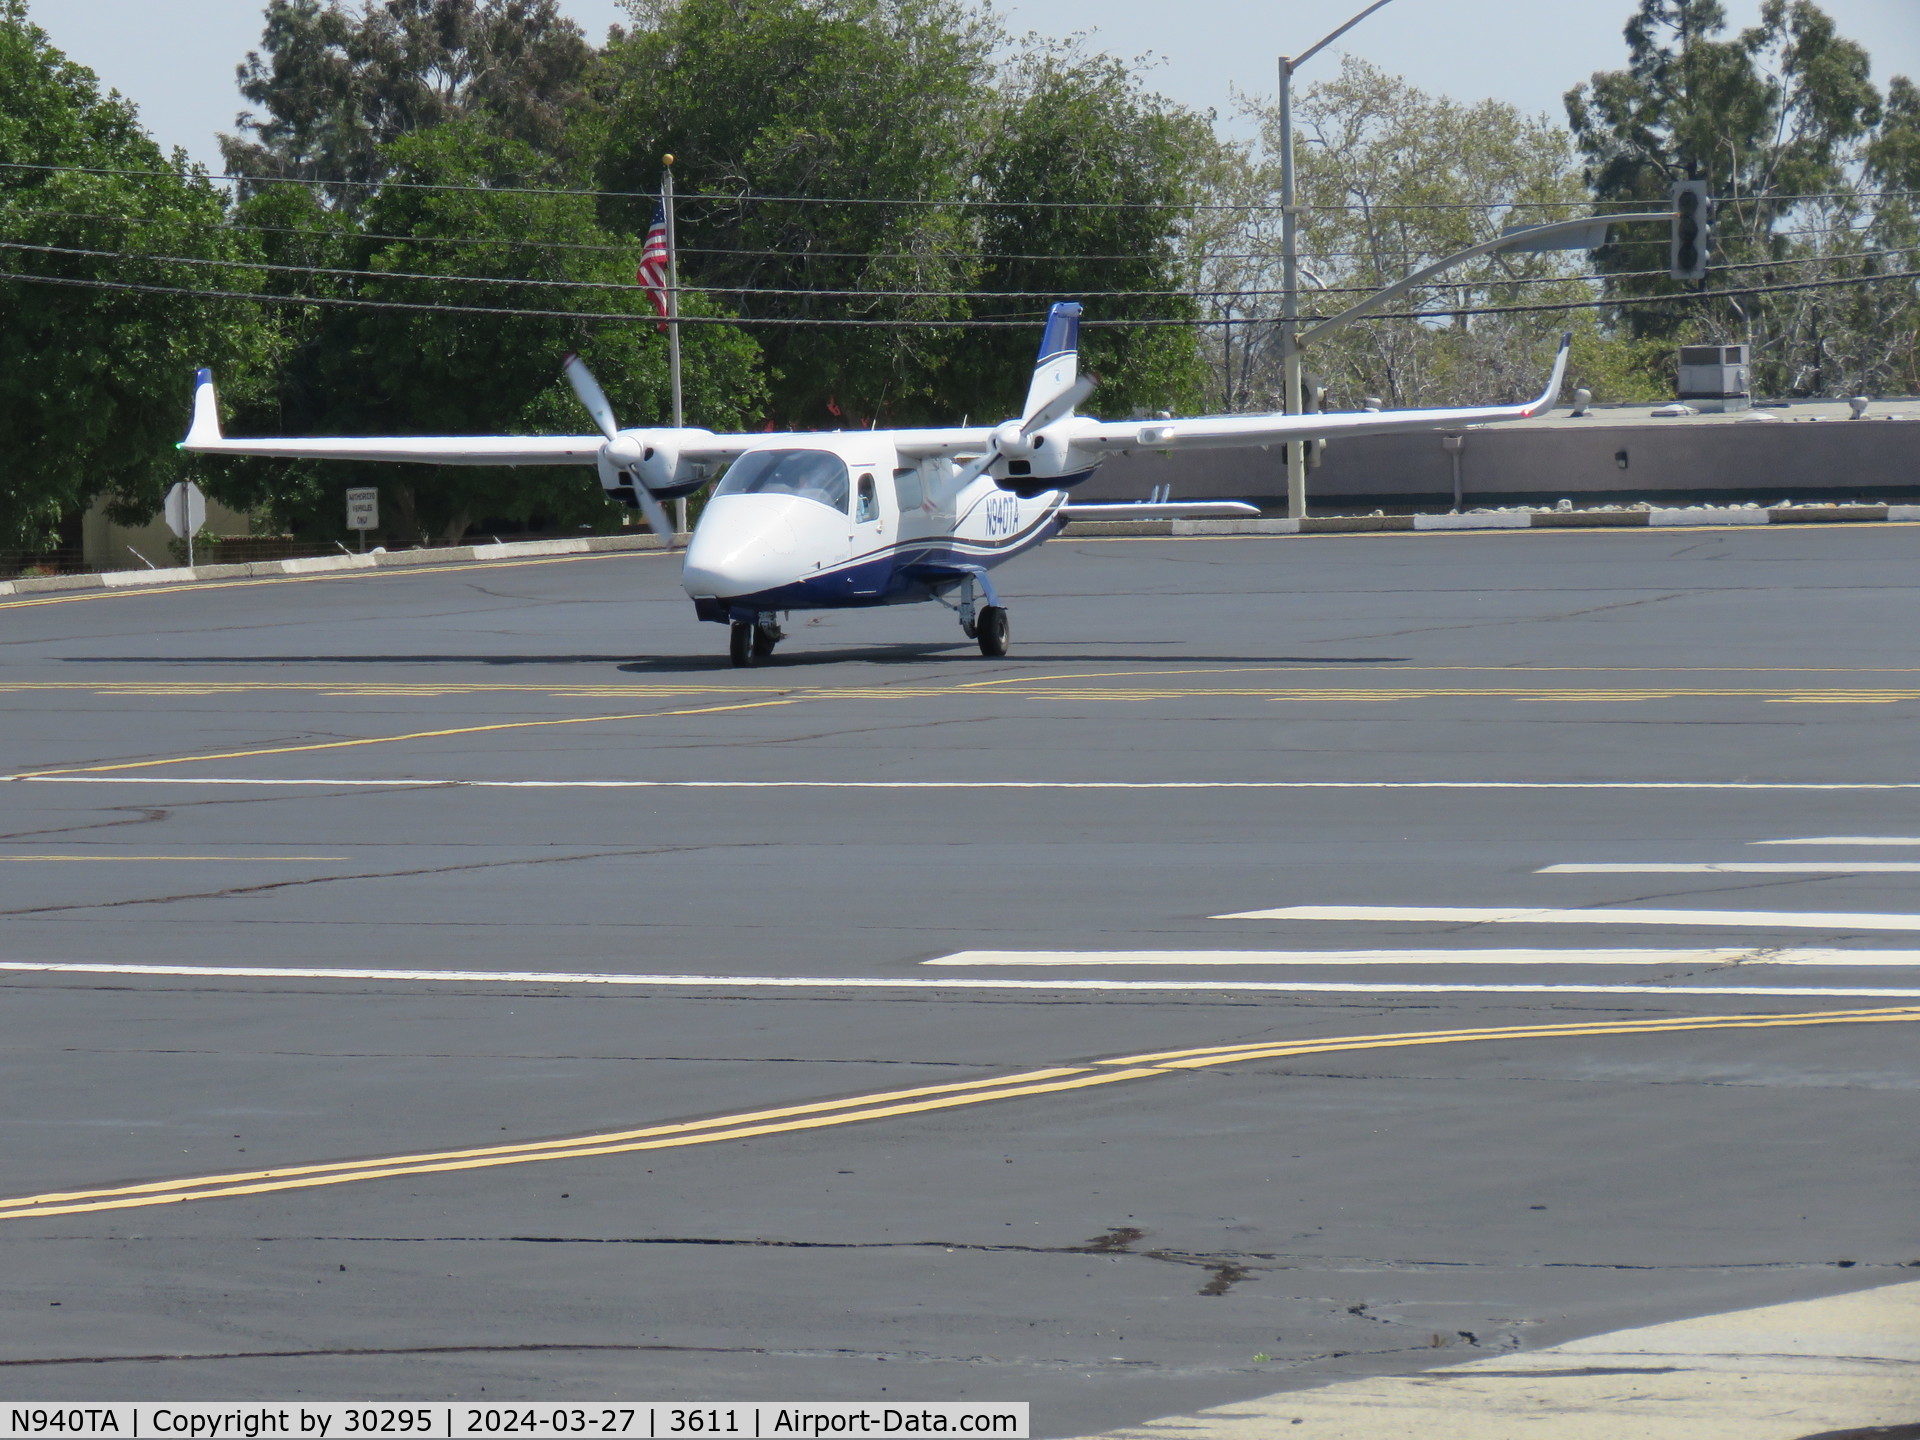 N940TA, 2014 Tecnam P-2006T C/N 140/US, Waiting to take off